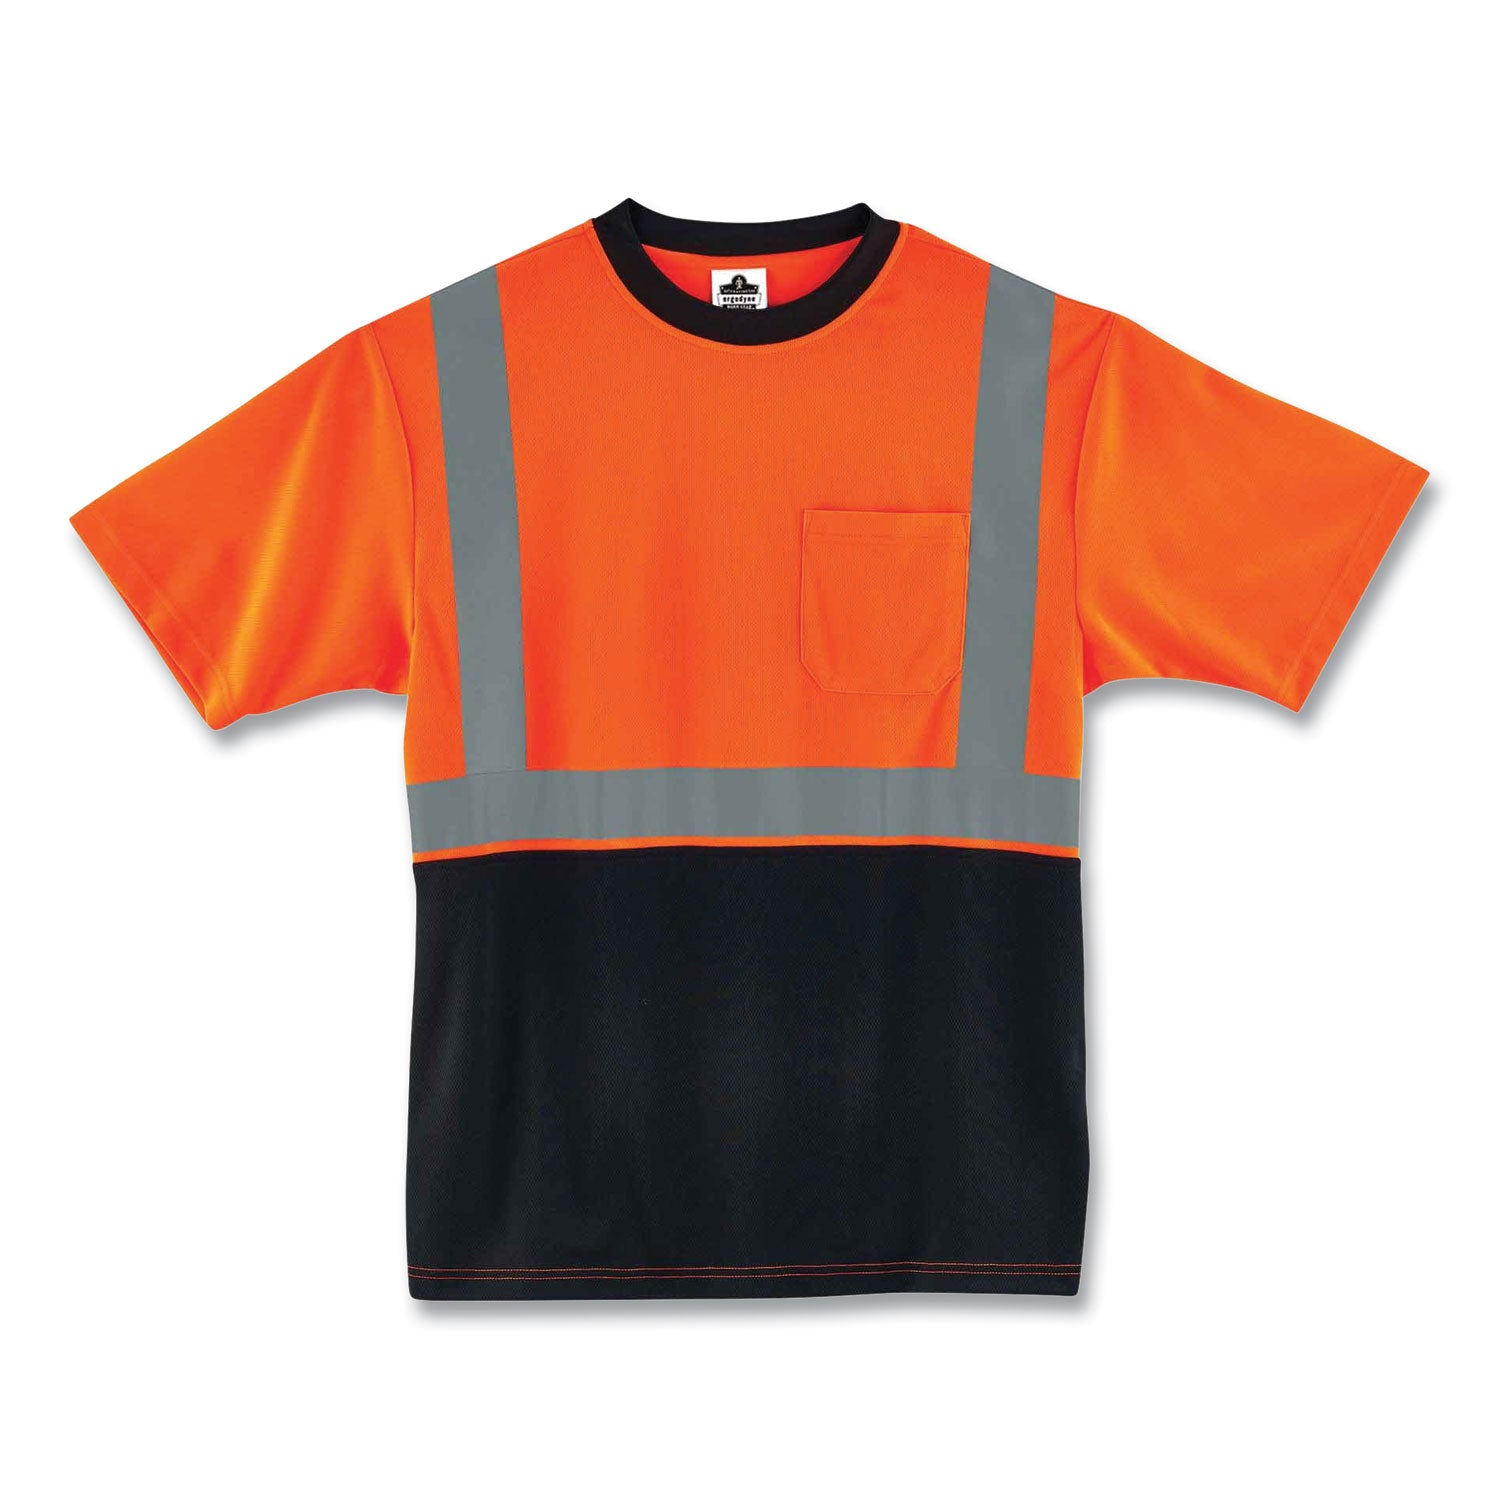 glowear-8289bk-class-2-hi-vis-t-shirt-with-black-bottom-x-large-orange-ships-in-1-3-business-days_ego22515 - 1